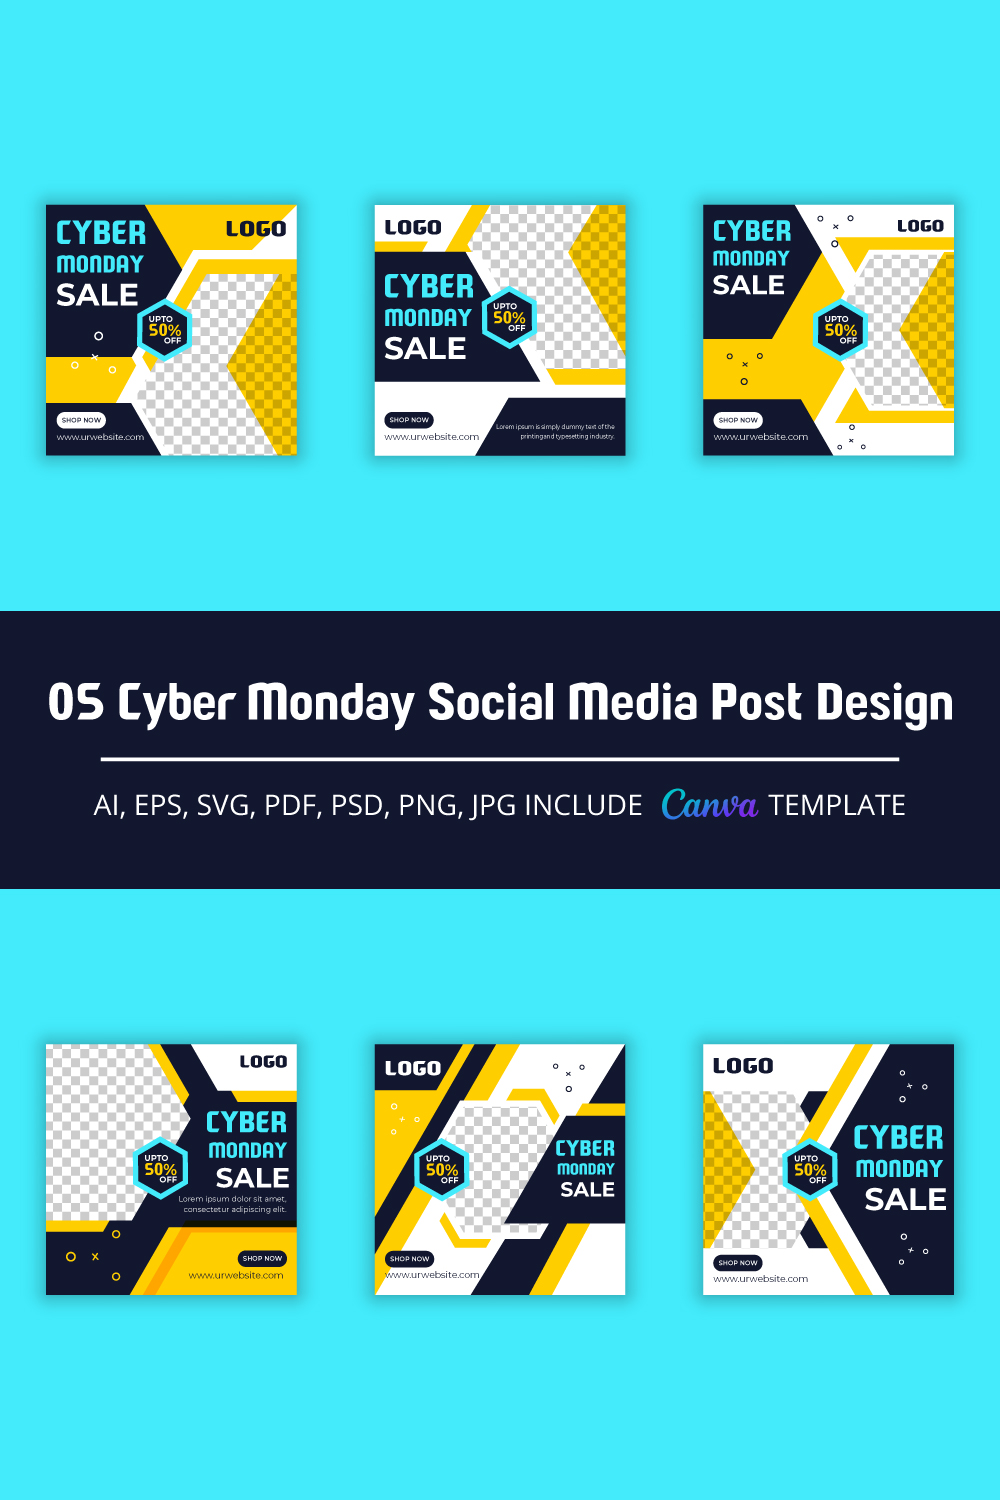 Cyber Monday Super Sale Social Media Post Template Pack Vol-01 pinterest image.